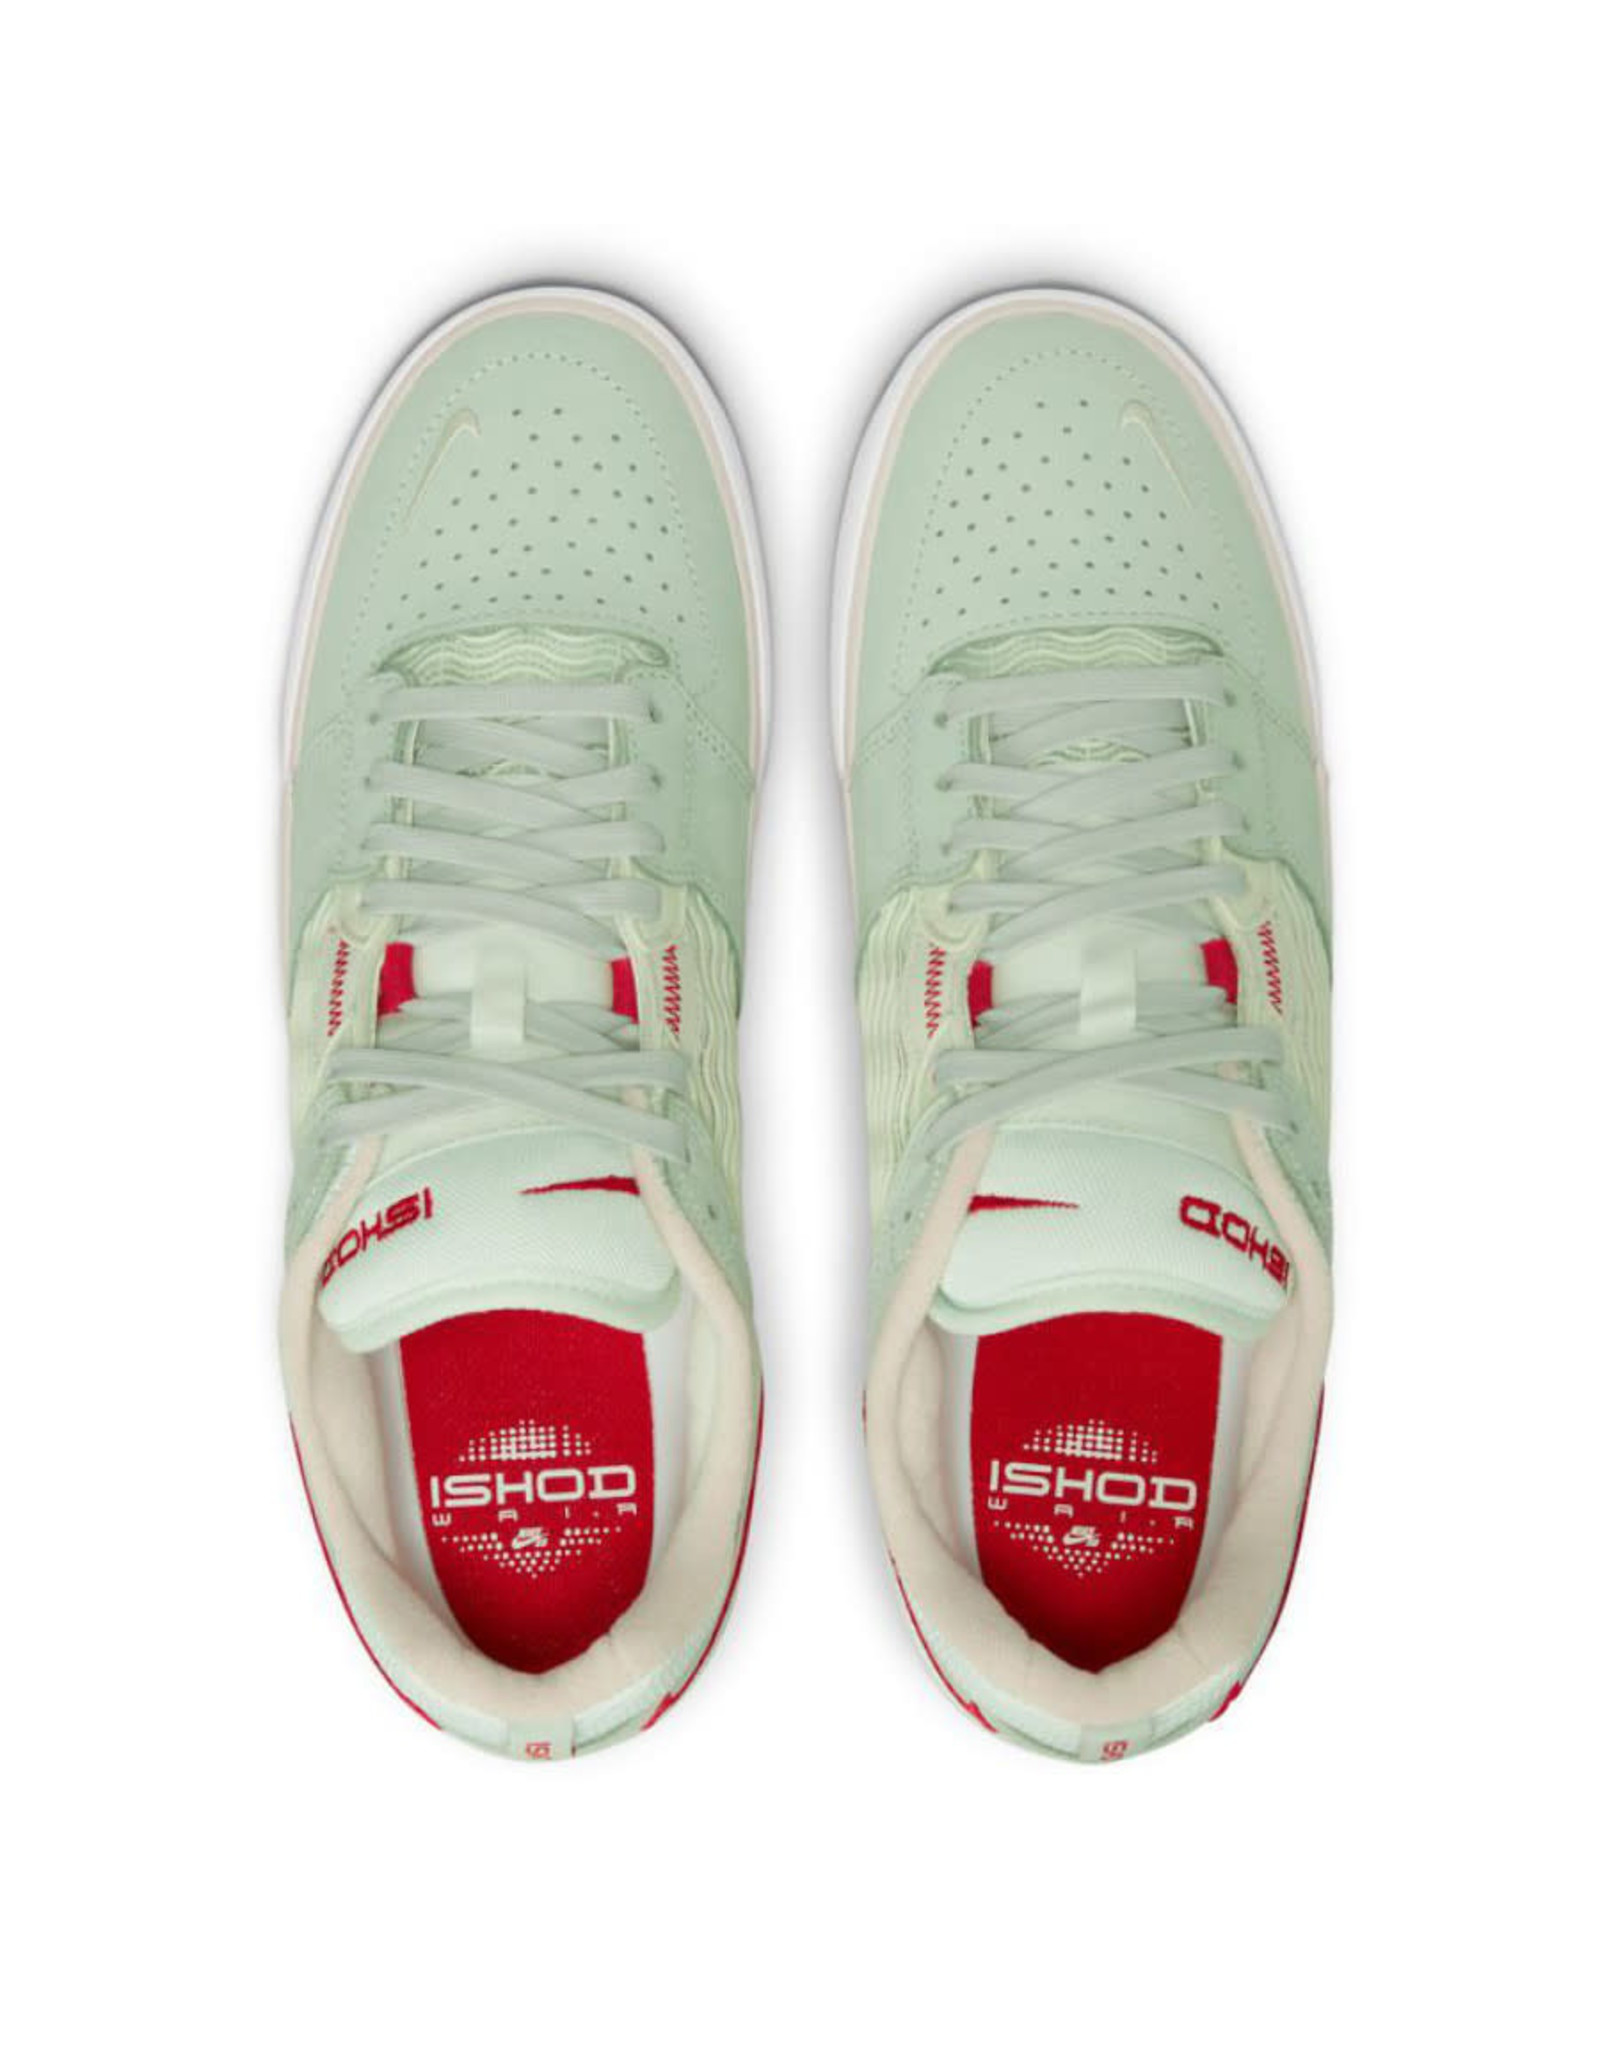 Nike SB Nike SB Shoe Ishod Wair Premium Pro (Seafoam/Red)